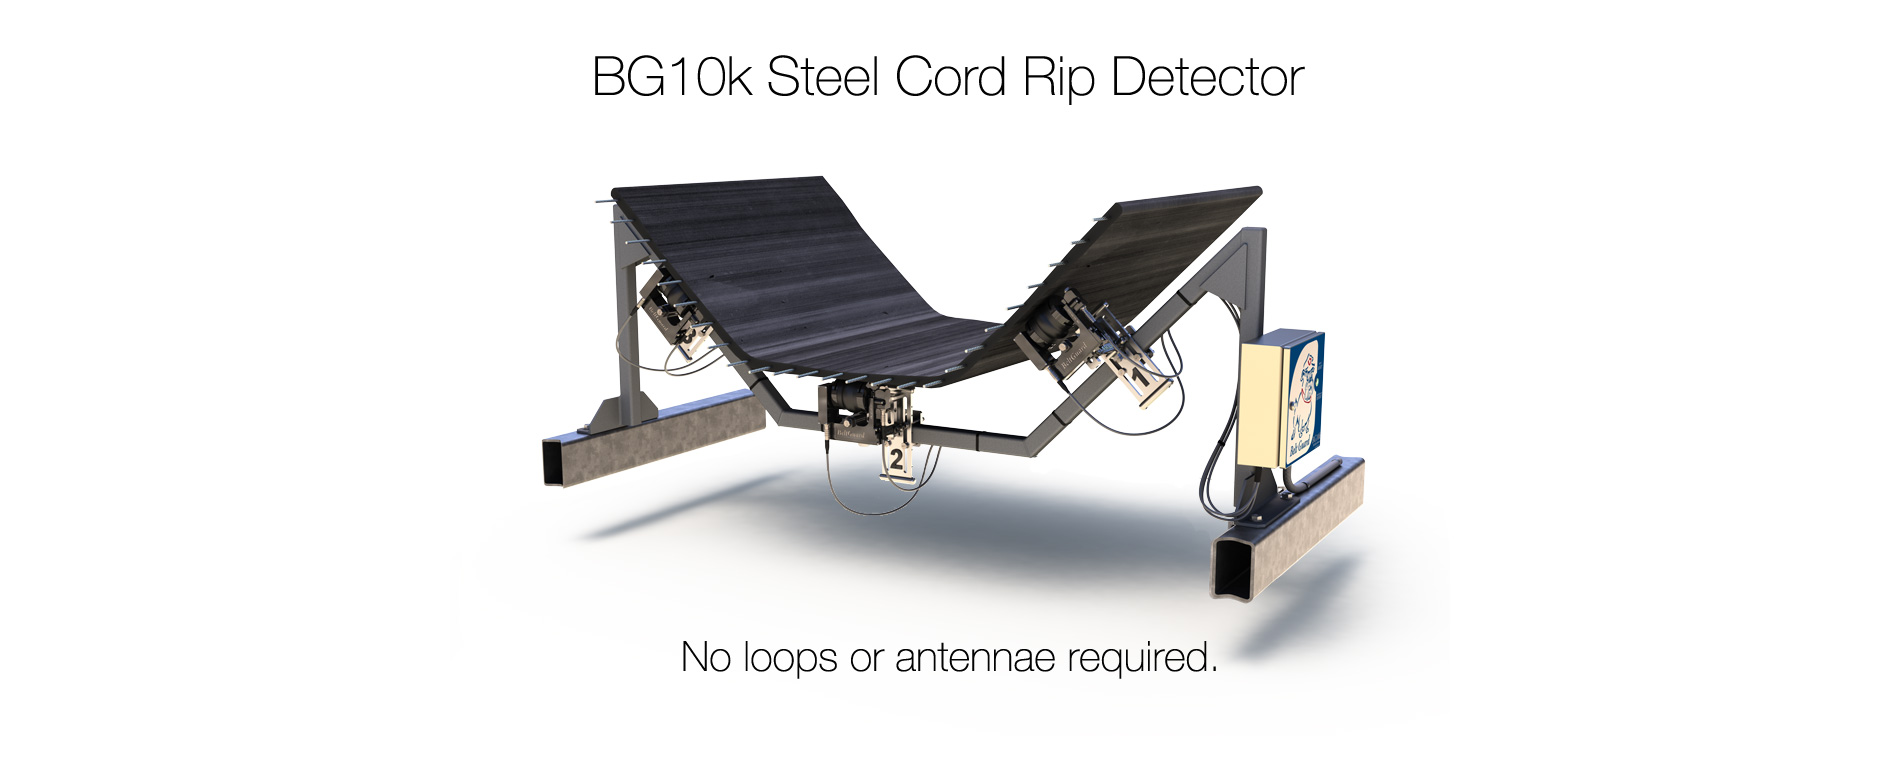 BG10k Steel Cord Rip Detector